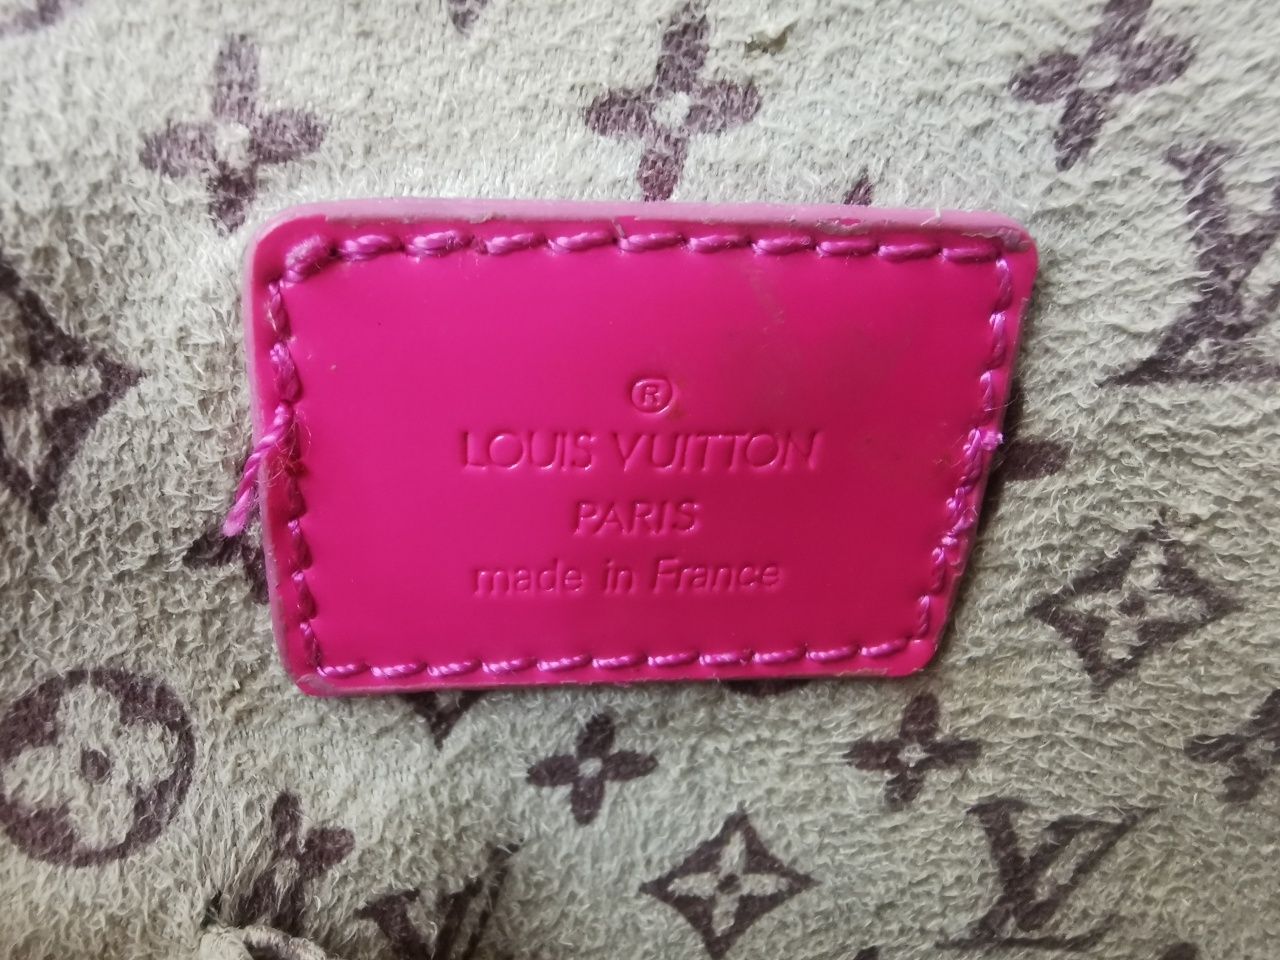 Loius Vuitton torba używana